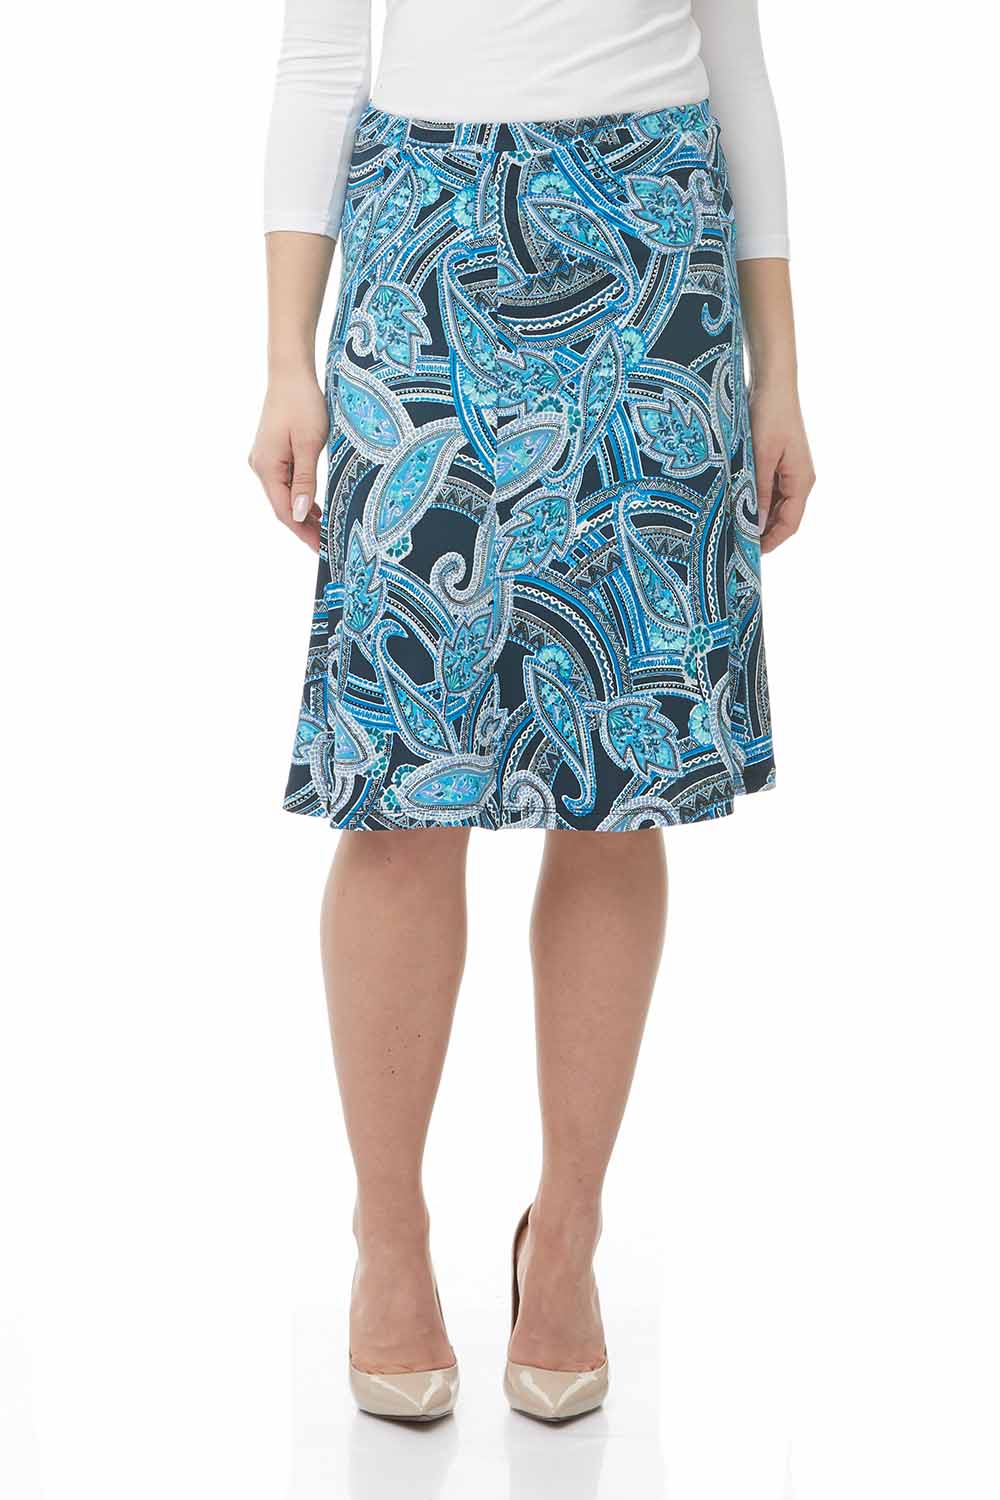 Esteez FLORENCE Modest Skirt for Women with Knee Length A-line design